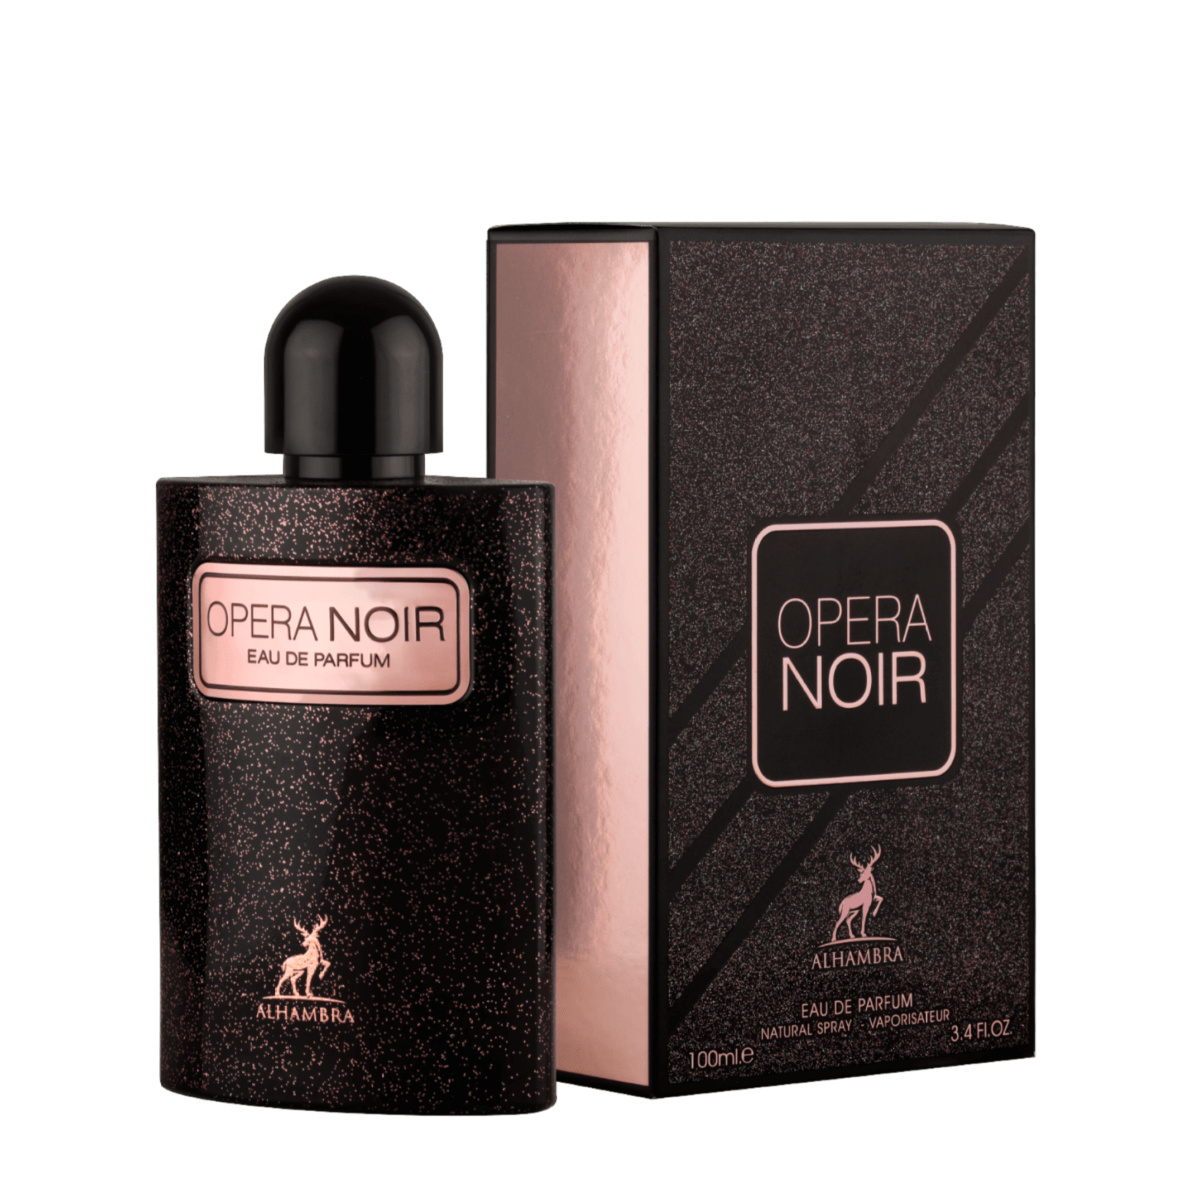 Jean Lowe Ombre Maison Alhambra 100ml EDP Unisex - Noir Perfumeria